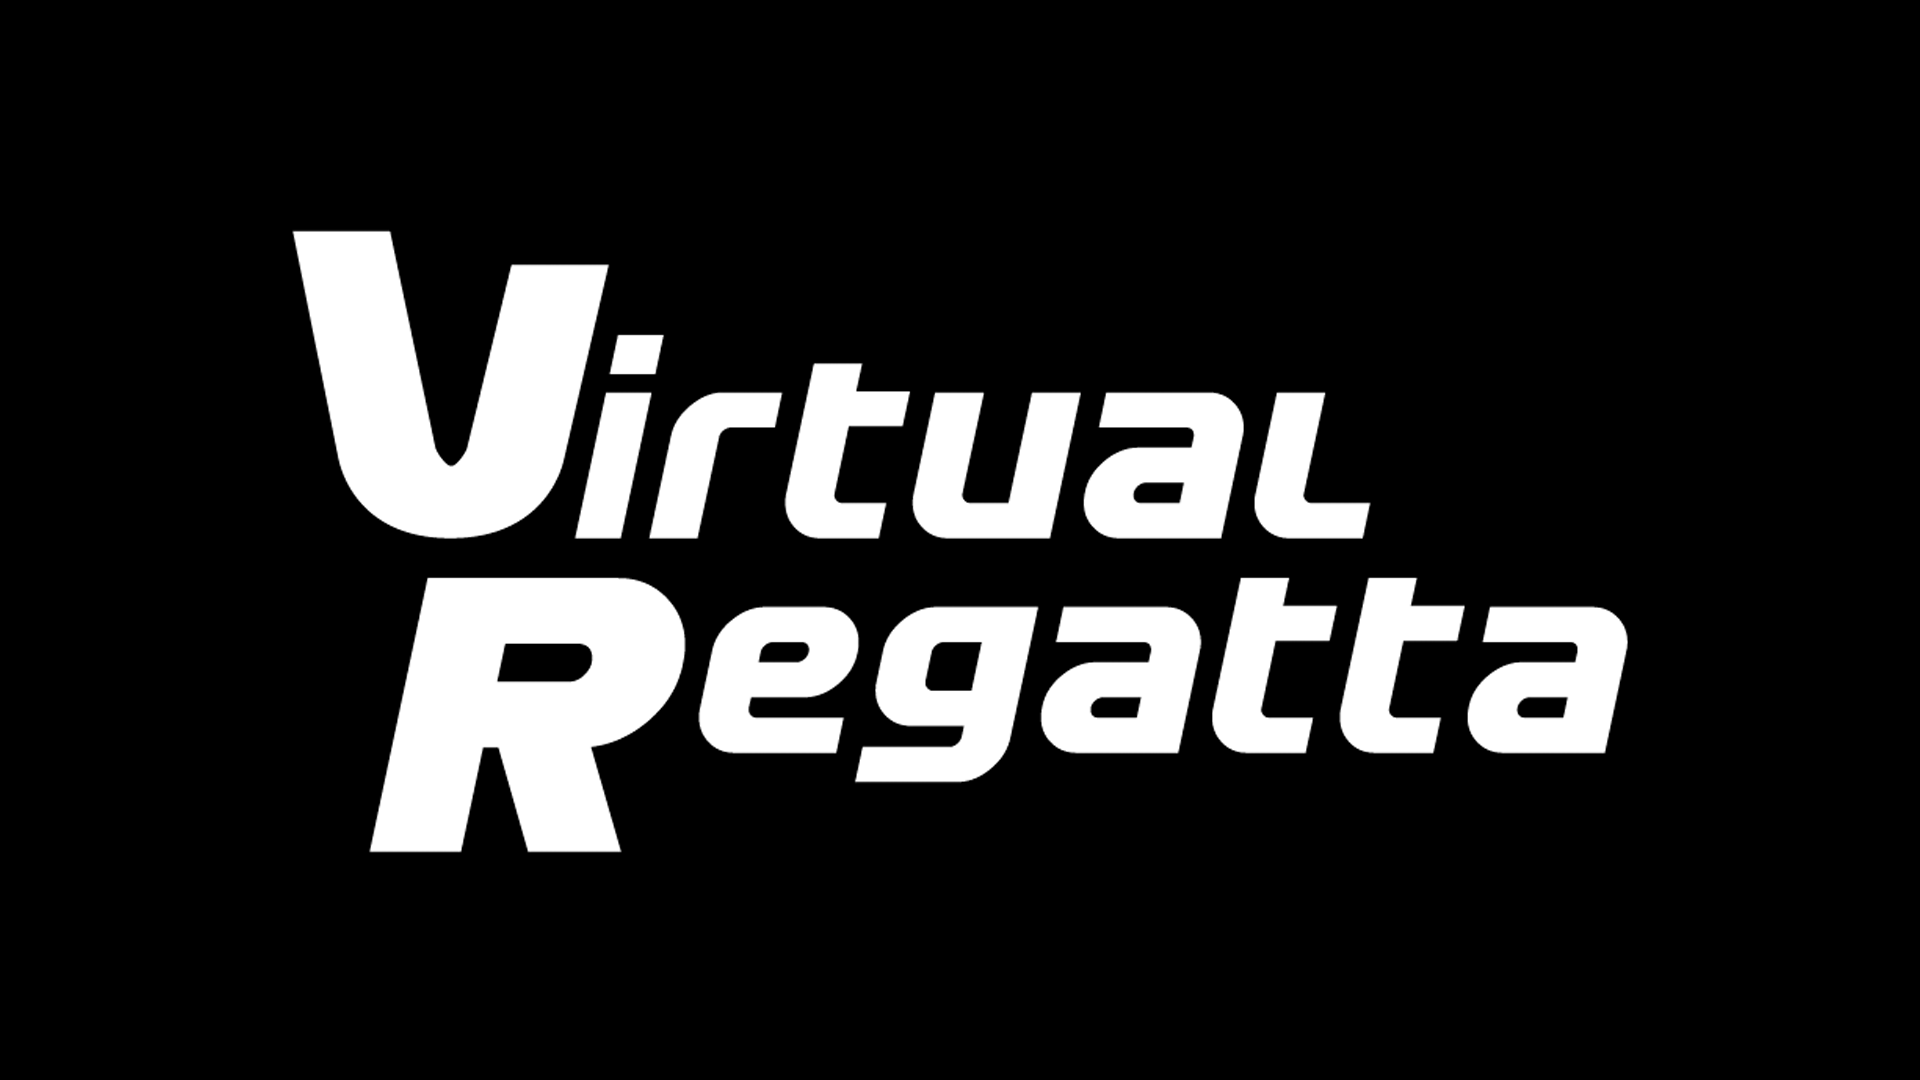 virtual regatta